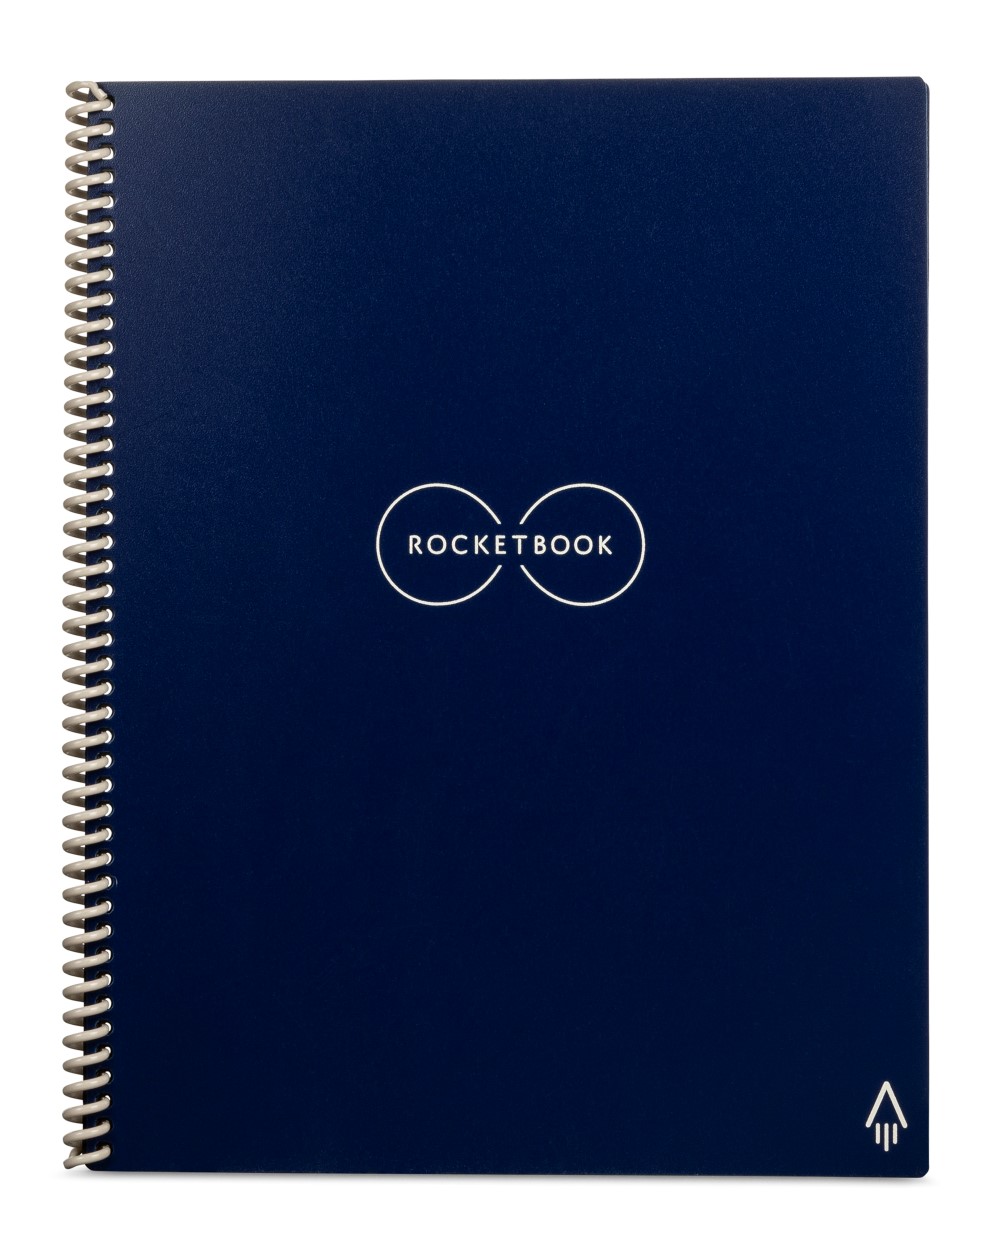 Rocketbook Everlast Letter Dot Grid Reusable Smart Notebook - Dark Blue (8.5 x 11 Inch)